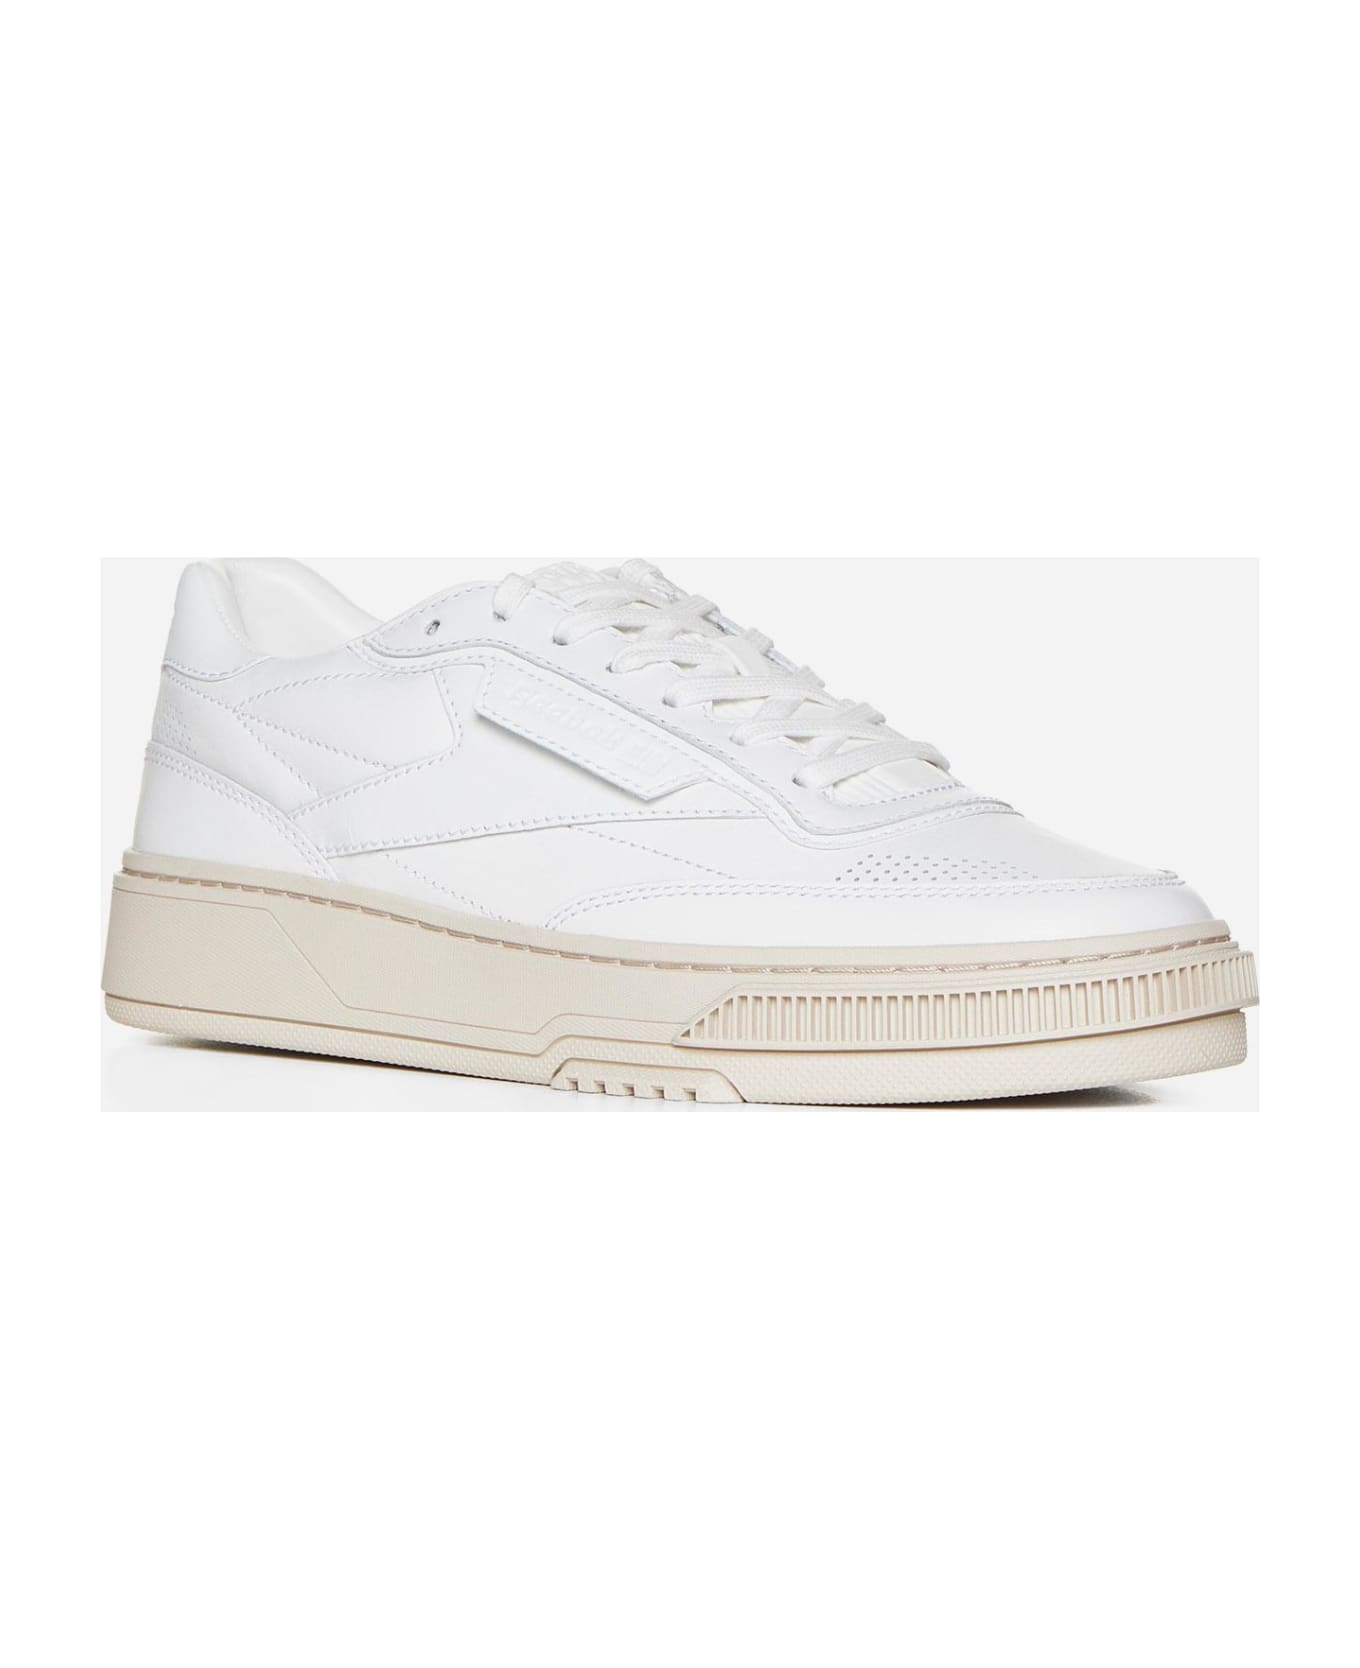 Reebok Club C Ltd Leather Sneakers - White Lthe スニーカー